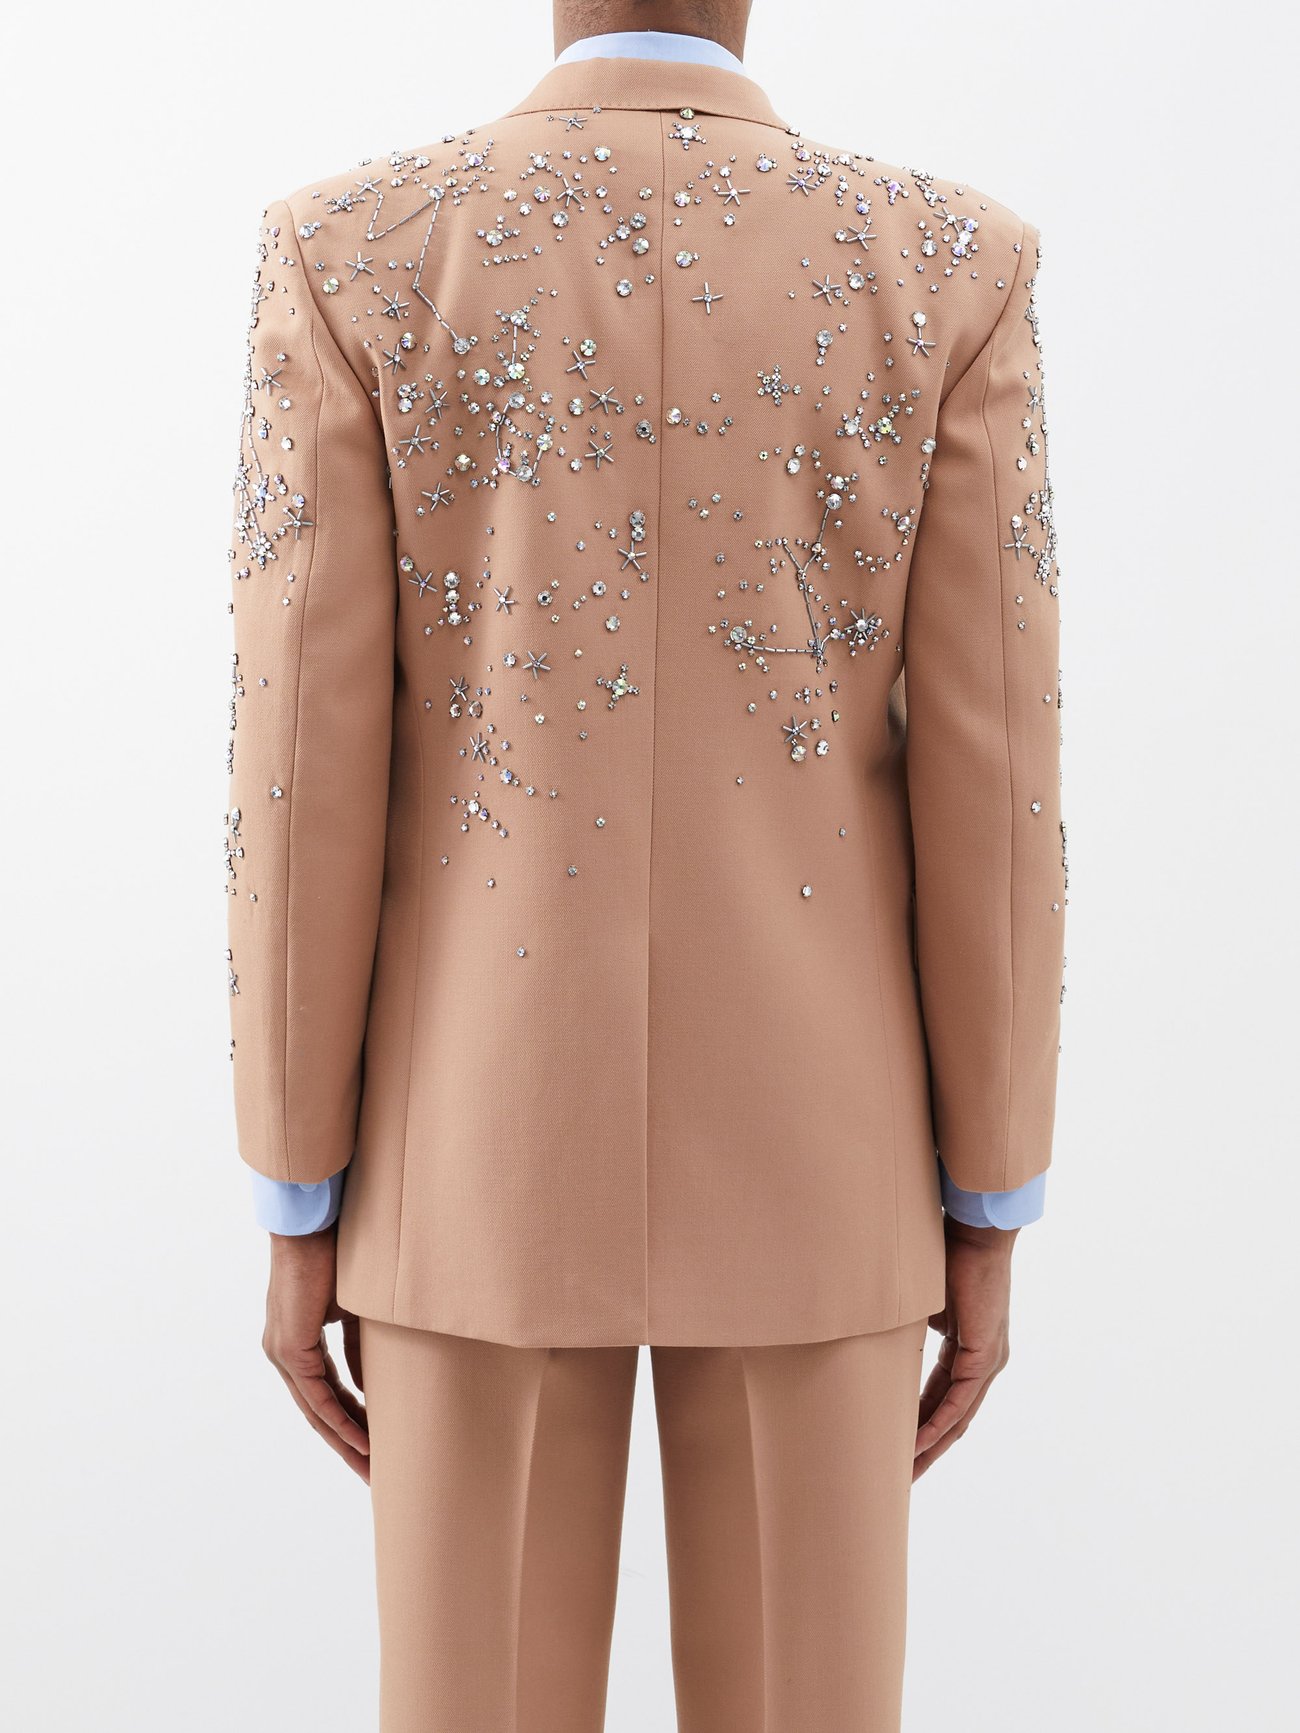 Gucci Set of 5 Brown Felt Covered Plastic Suit Coat Hangers 14